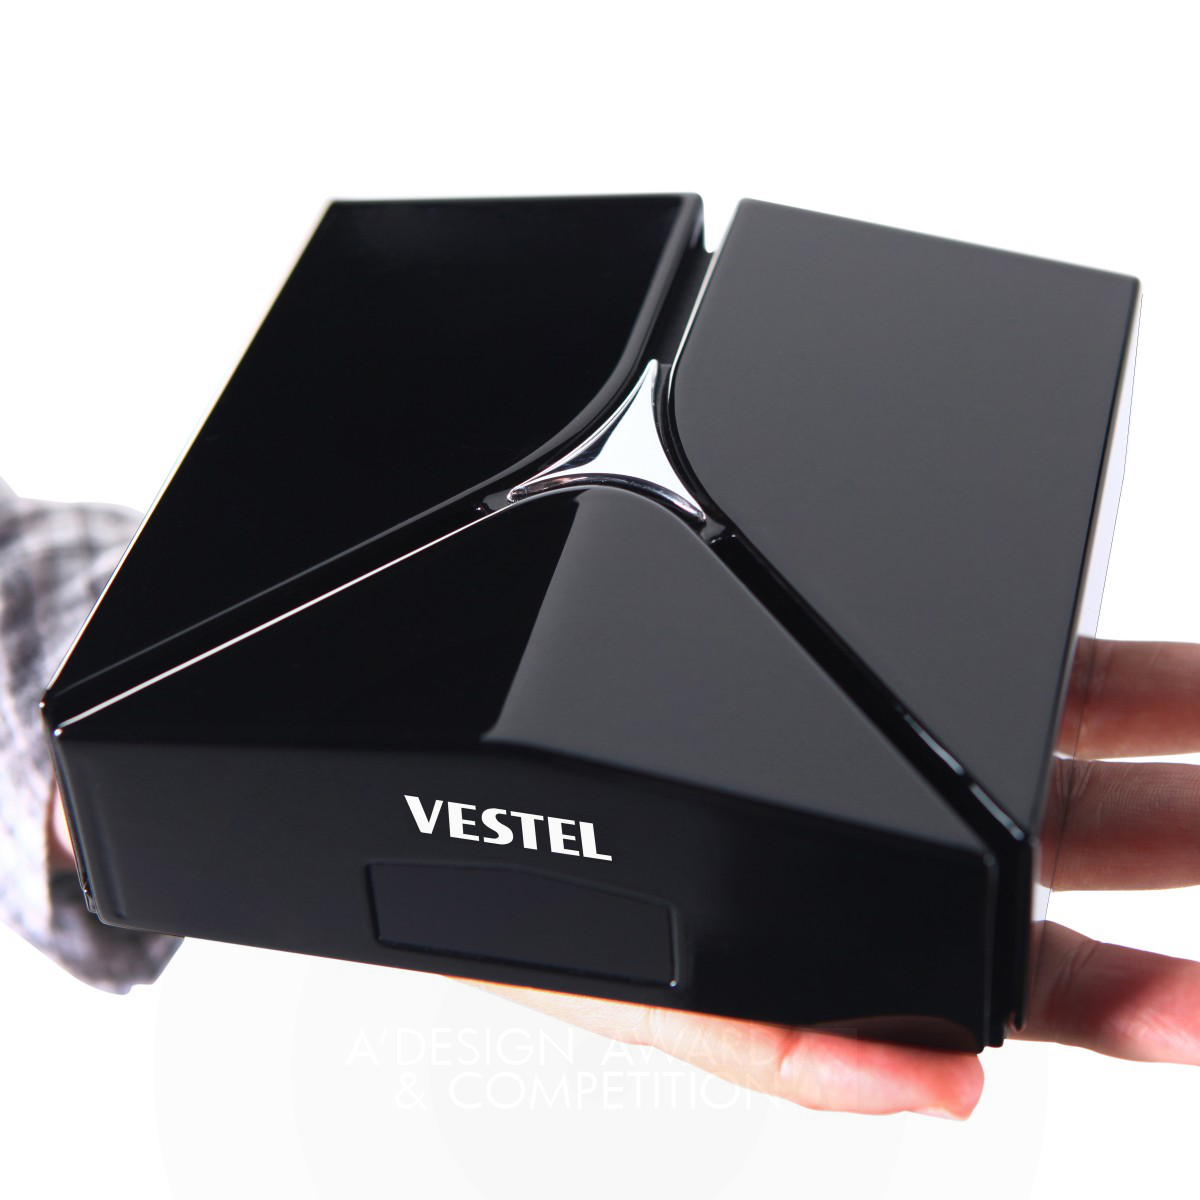 Vestel ID Team Digital video broadcasting device